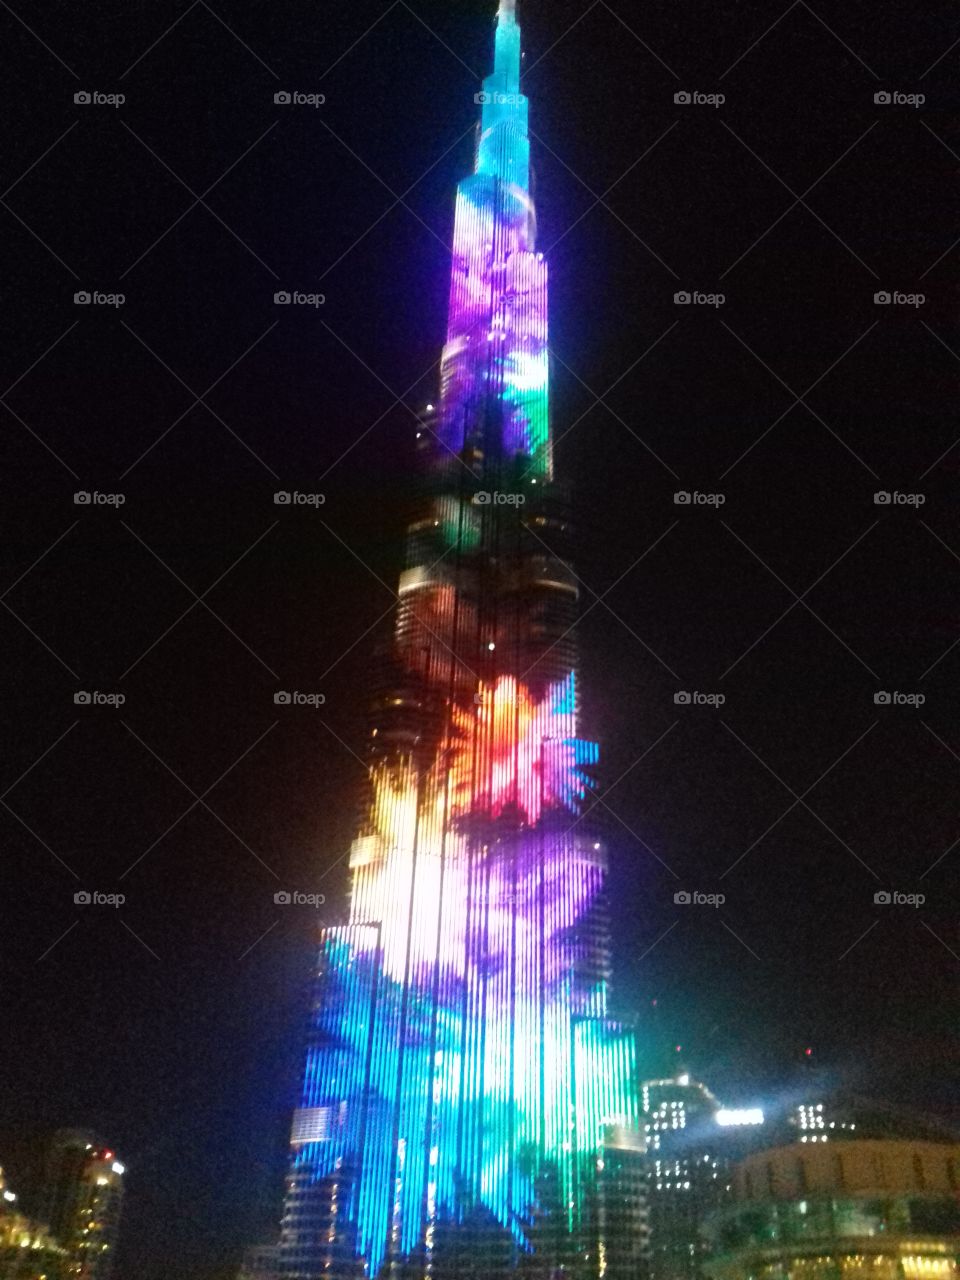 Burj khalifa at night time view.